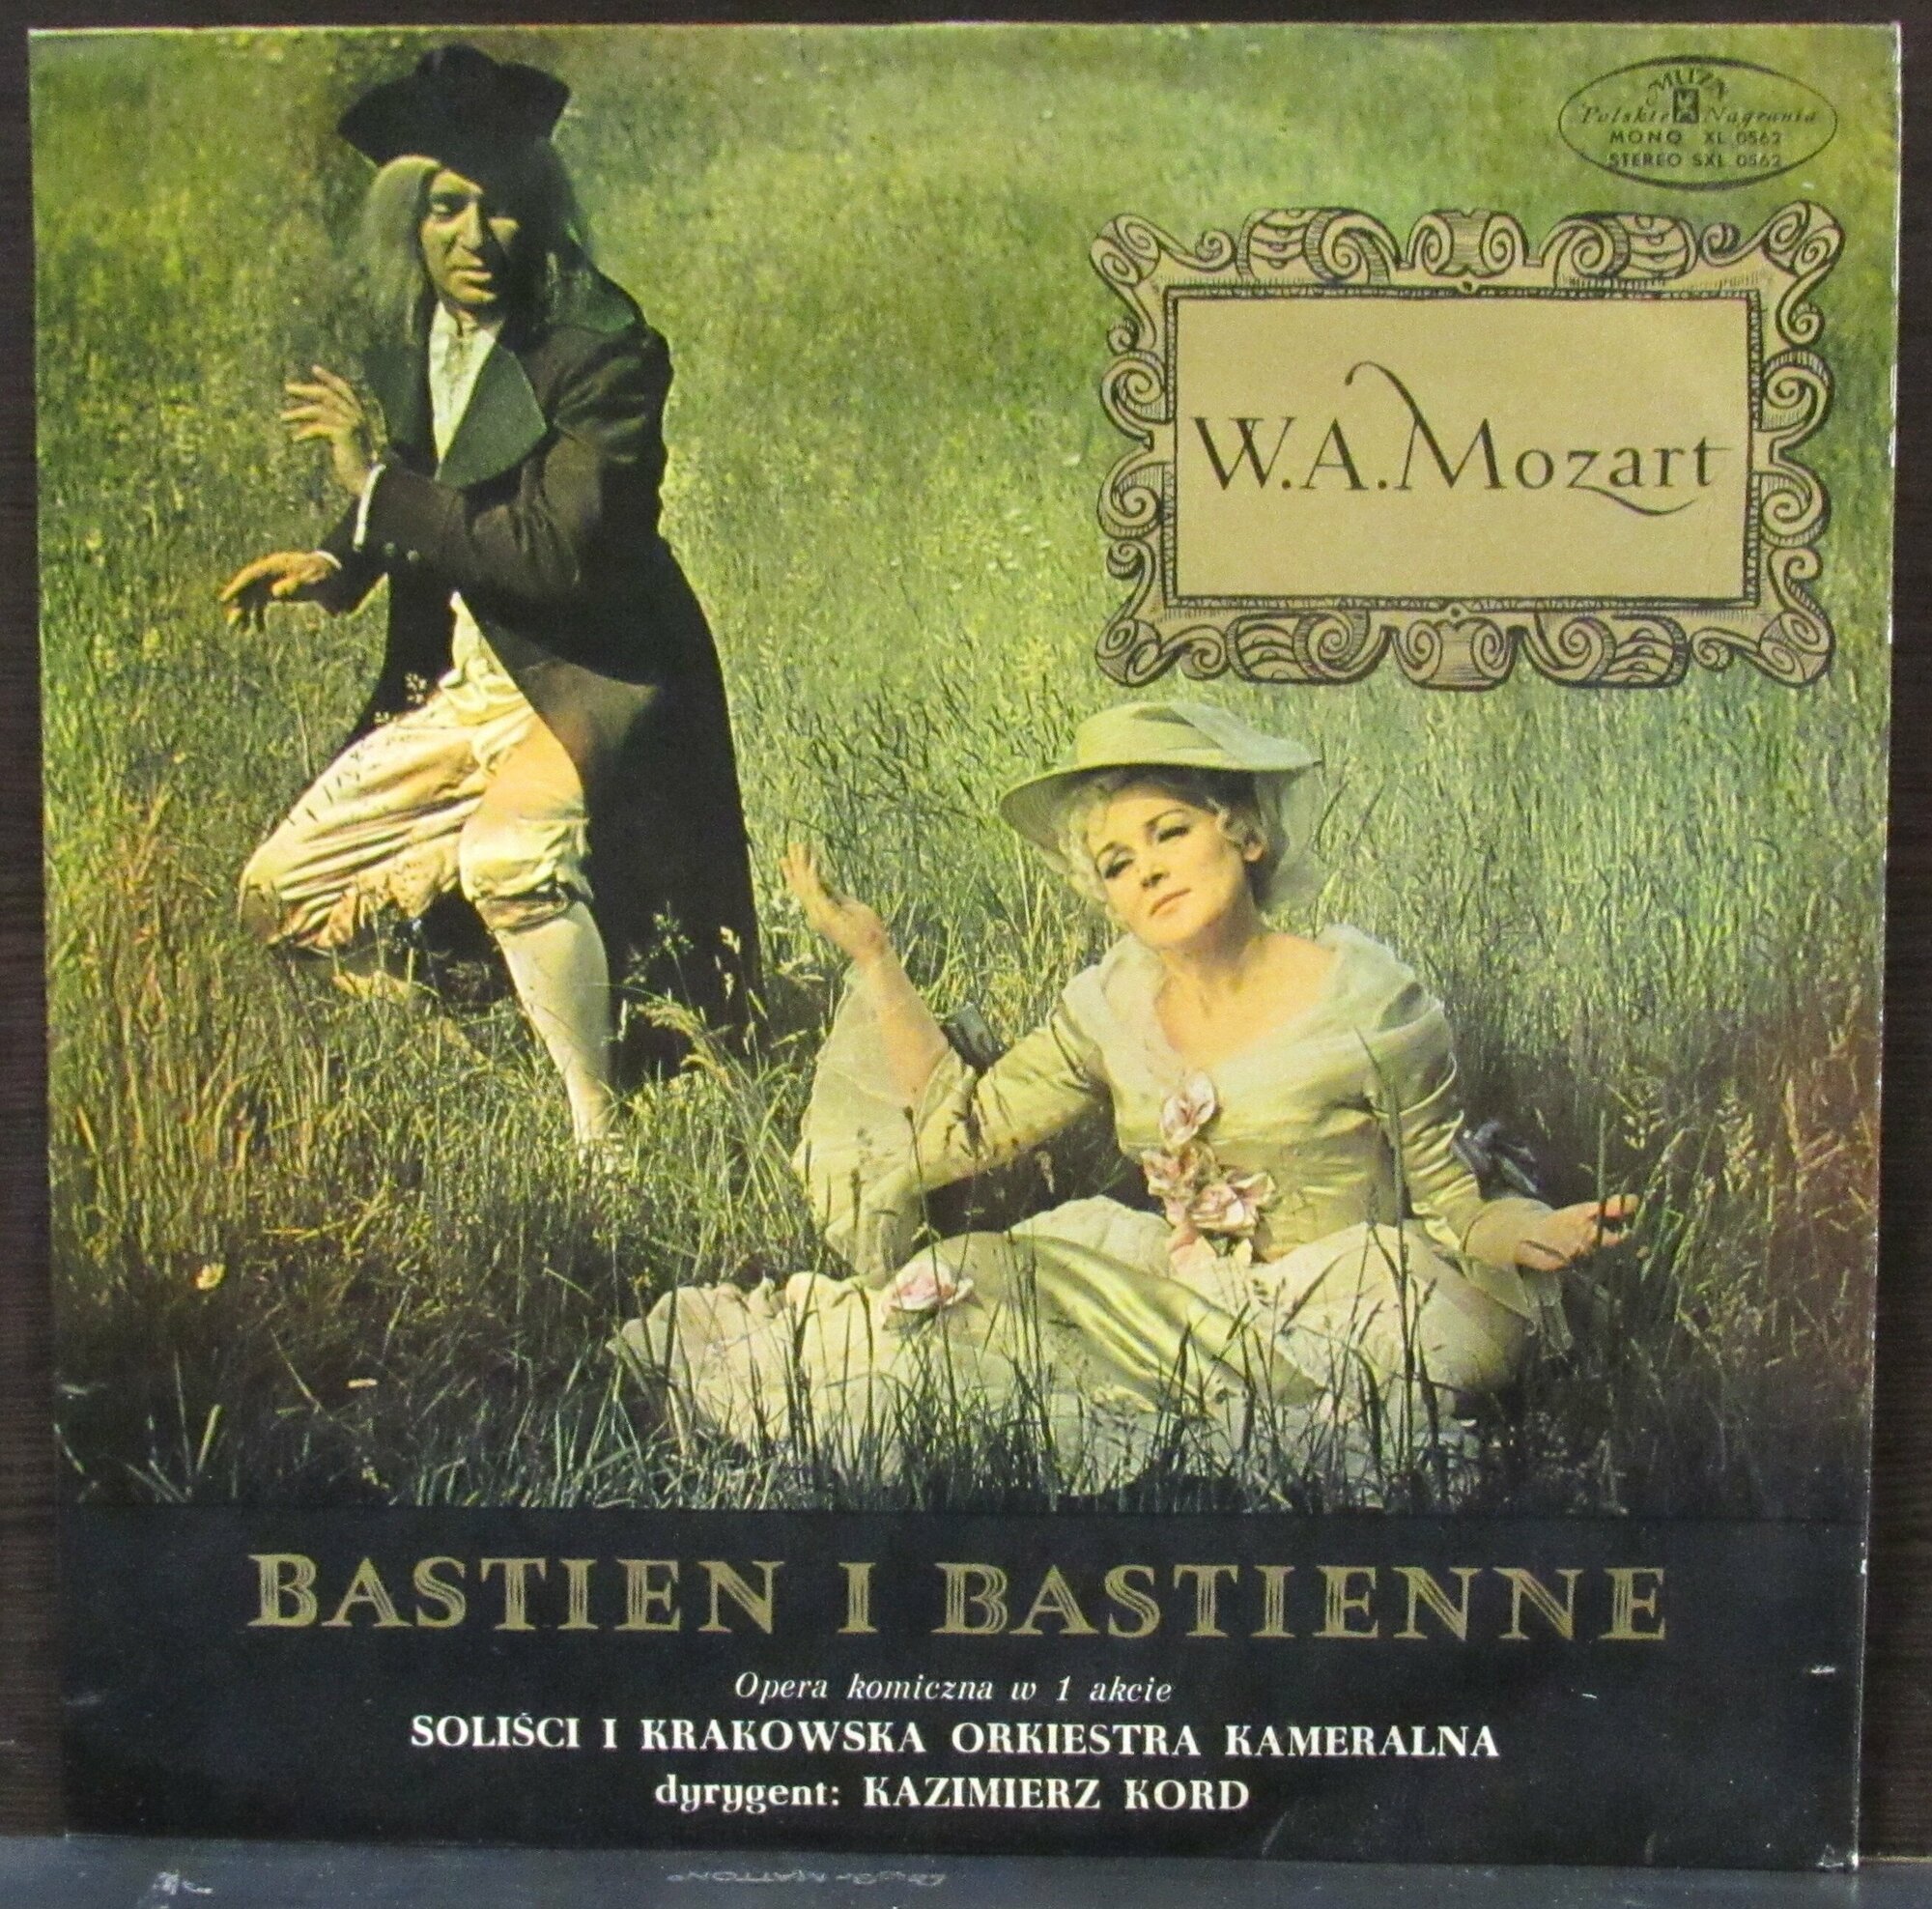 Mozart Wolfgang Amadeus "Виниловая пластинка Mozart Wolfgang Amadeus Bastien I Bastienne"